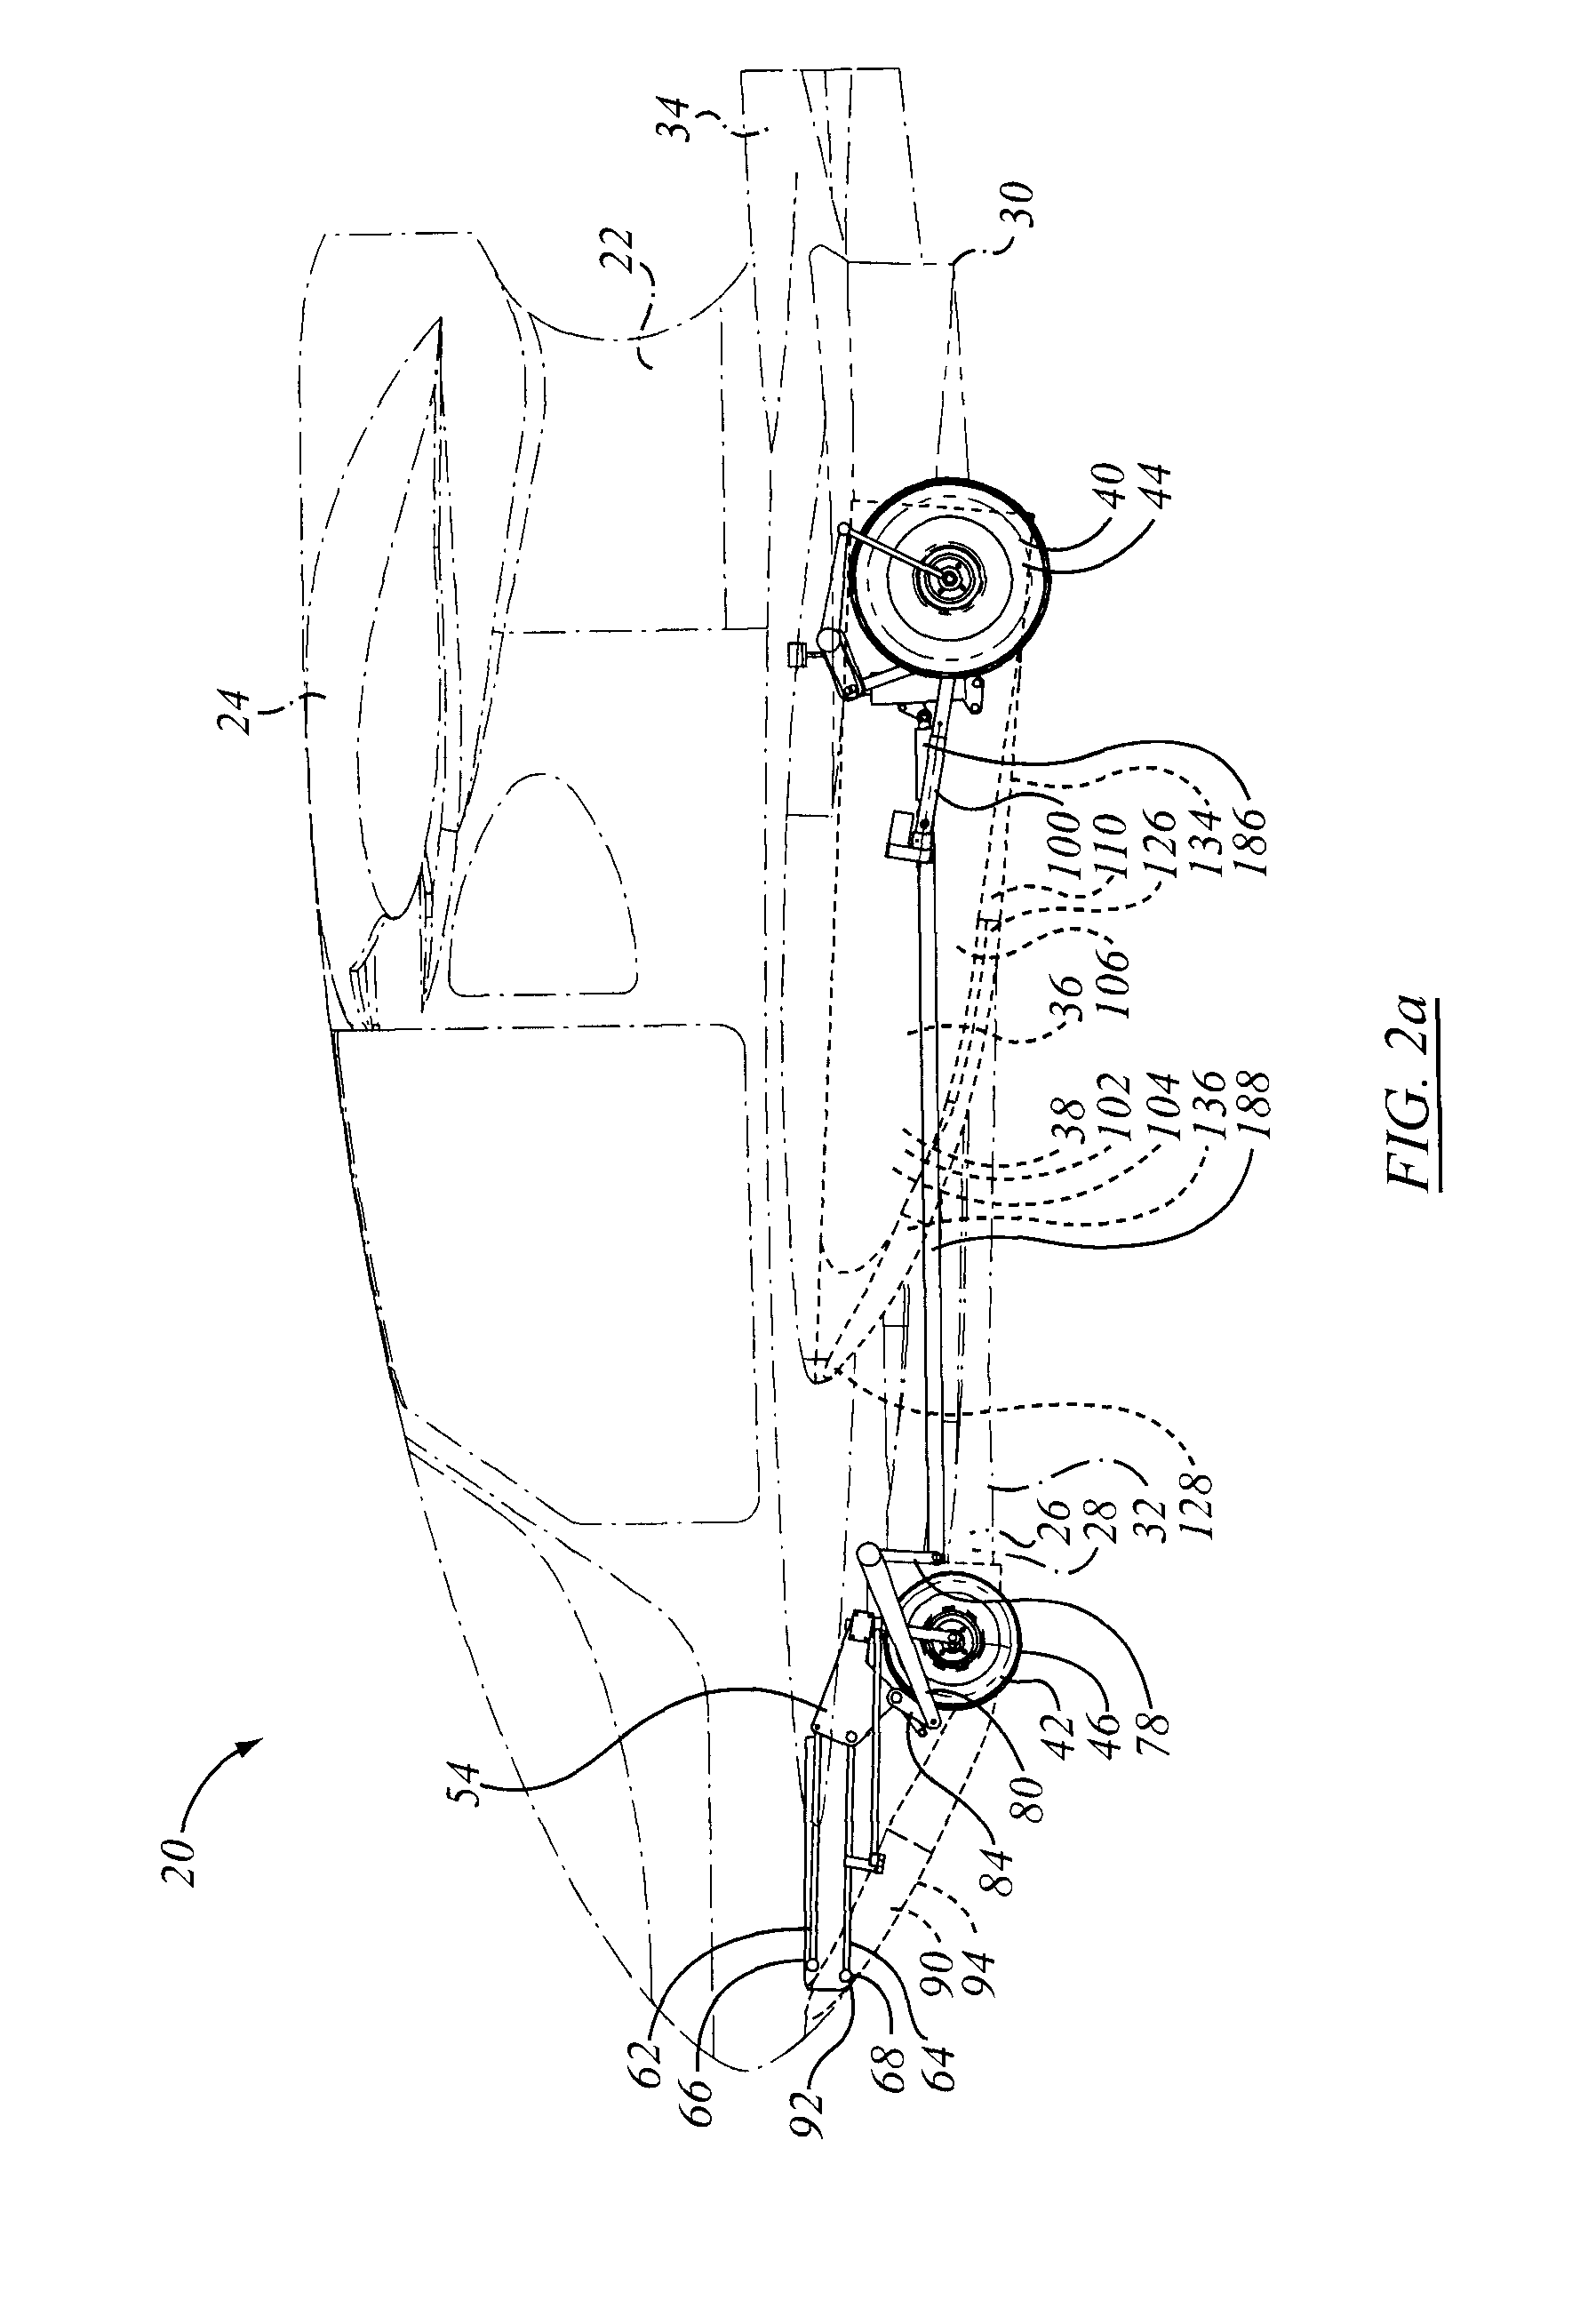 Aircraft landing gear and method